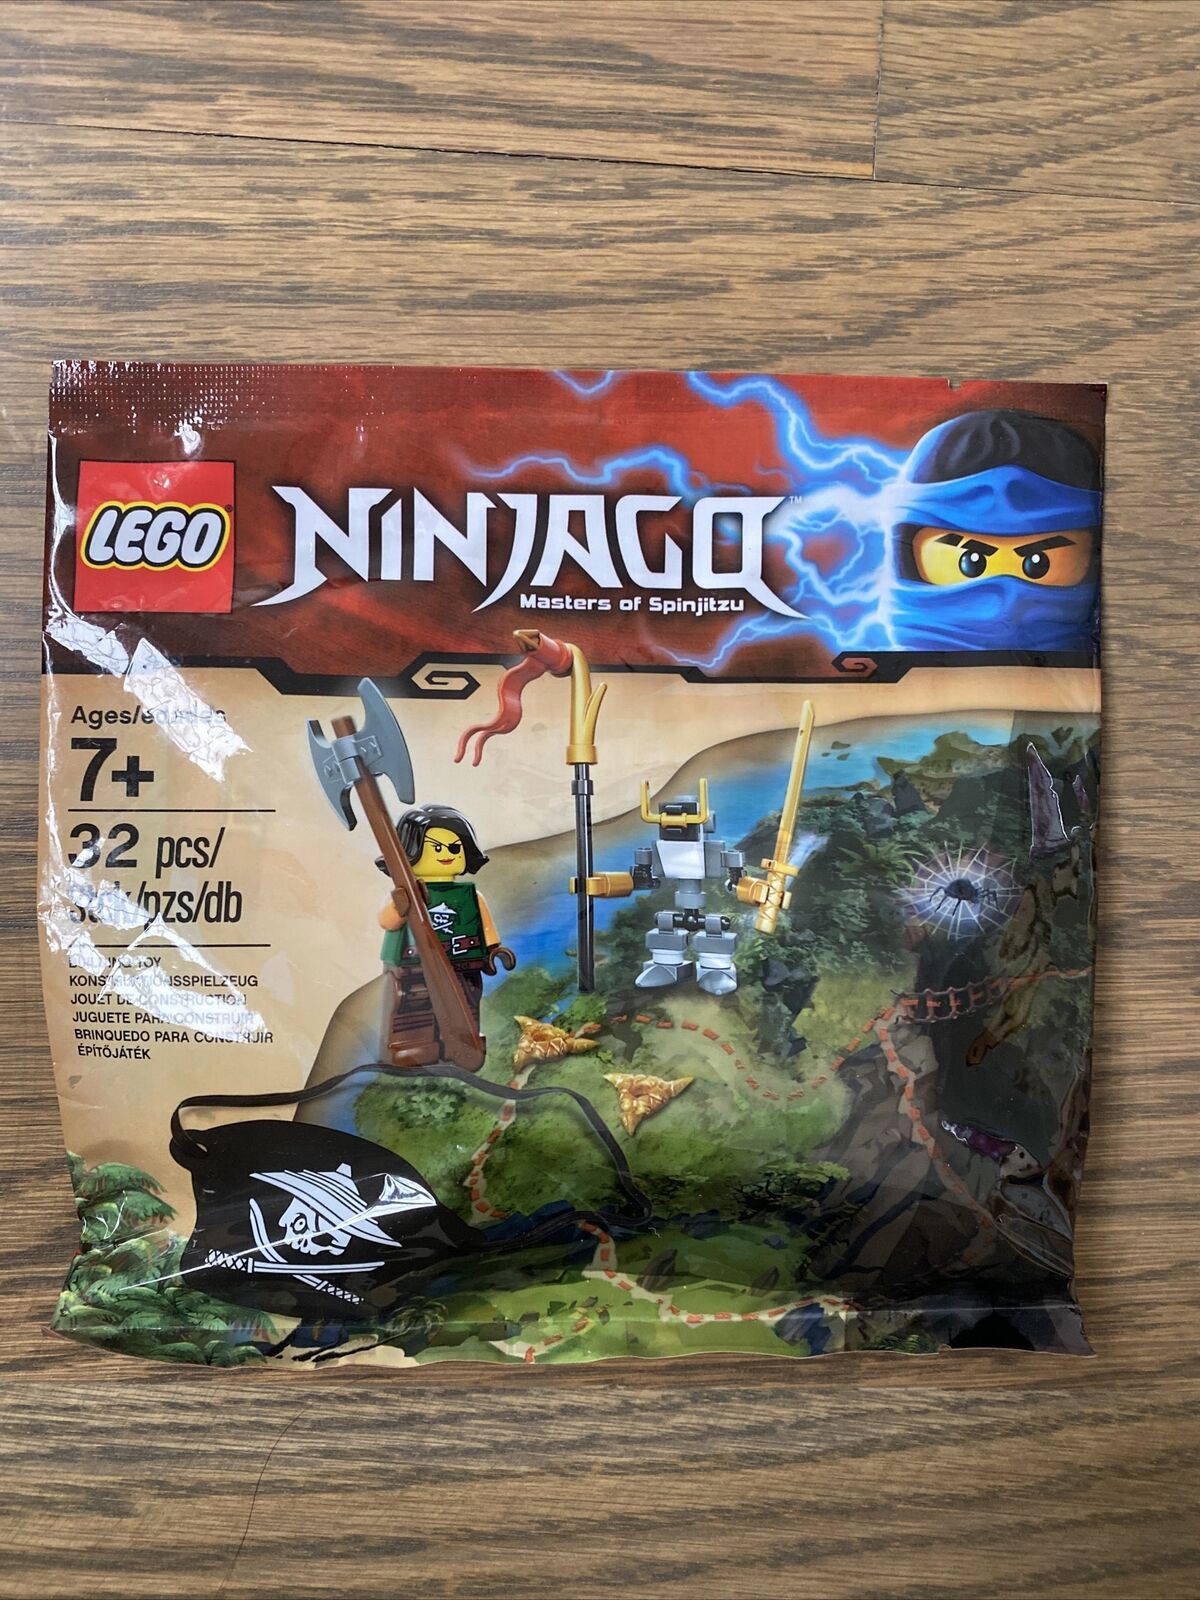 LEGO LEGO Ninja Go Masters of Spinjitzu, 32 Pcs/stck/pzs/db, BRAND NEW